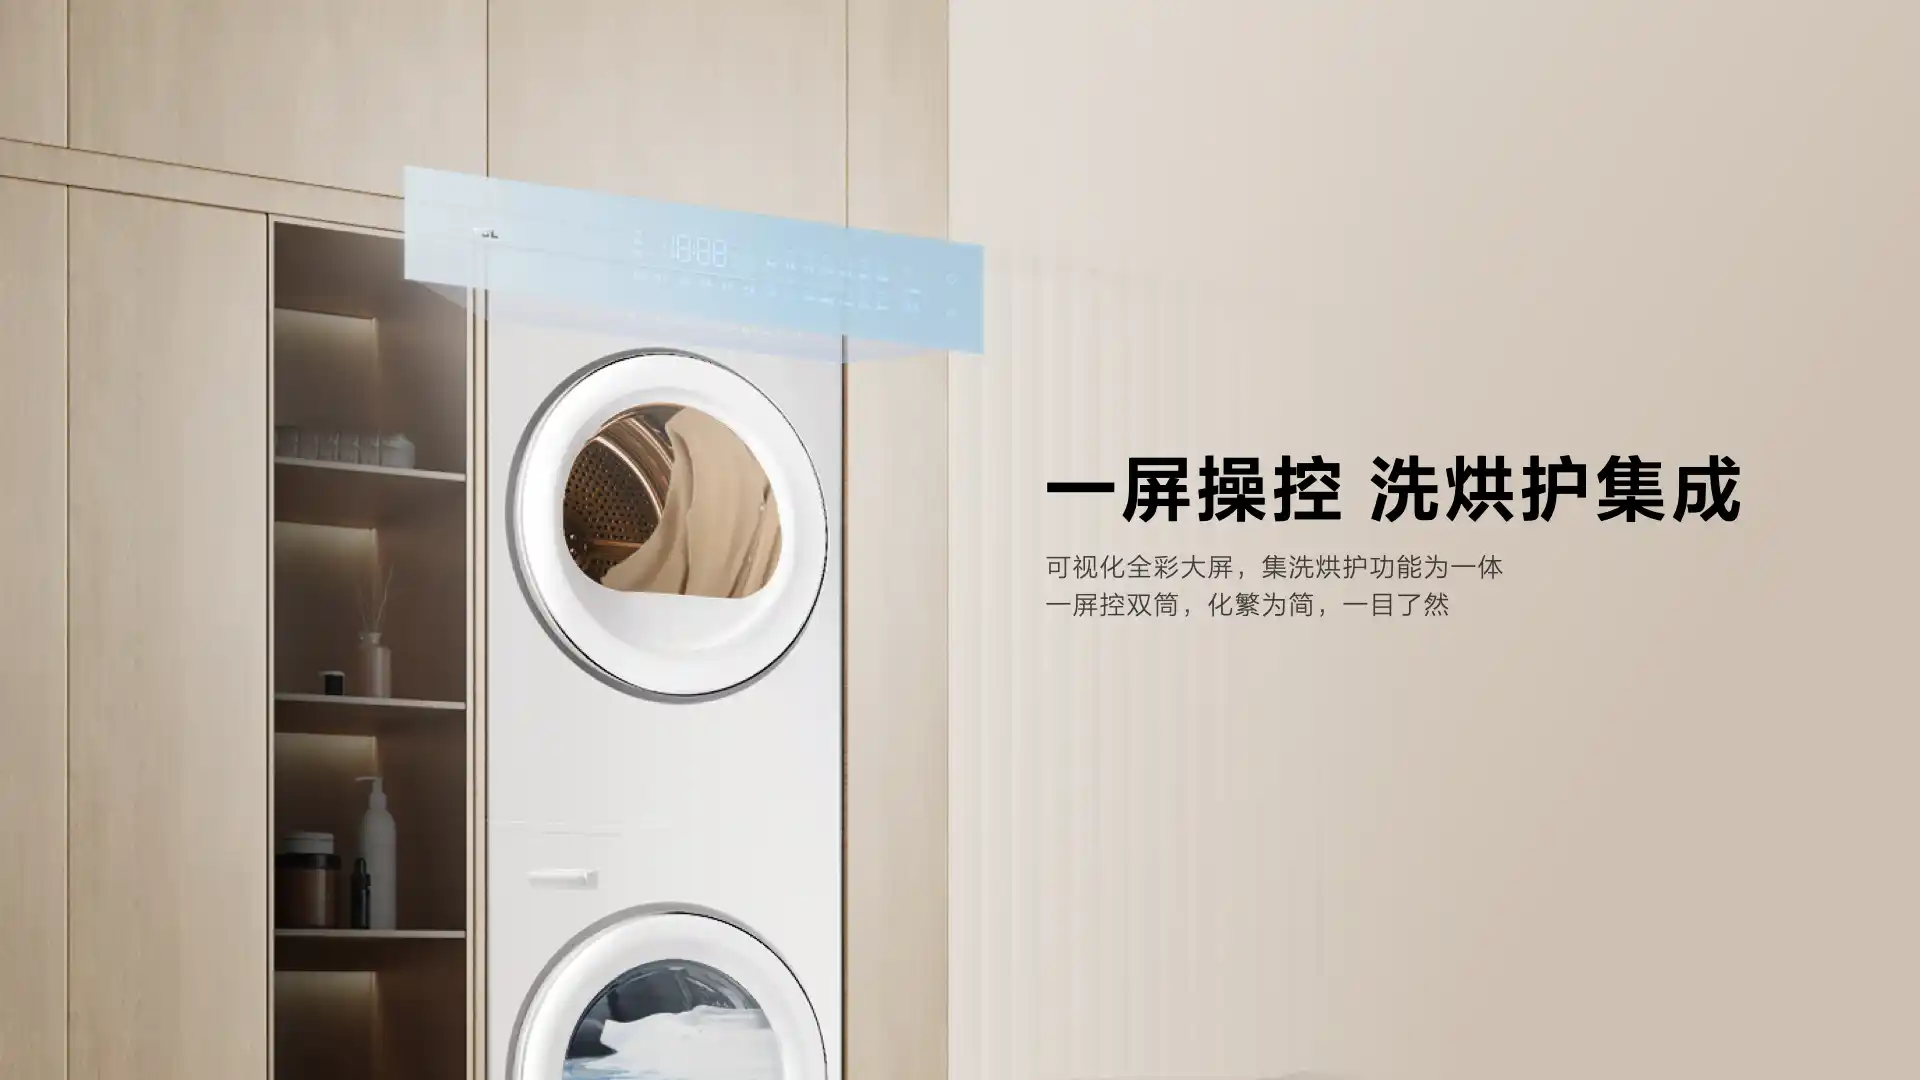 TCL发布双子舱洗烘护集成机T10， 开启洗衣机集成化新时代